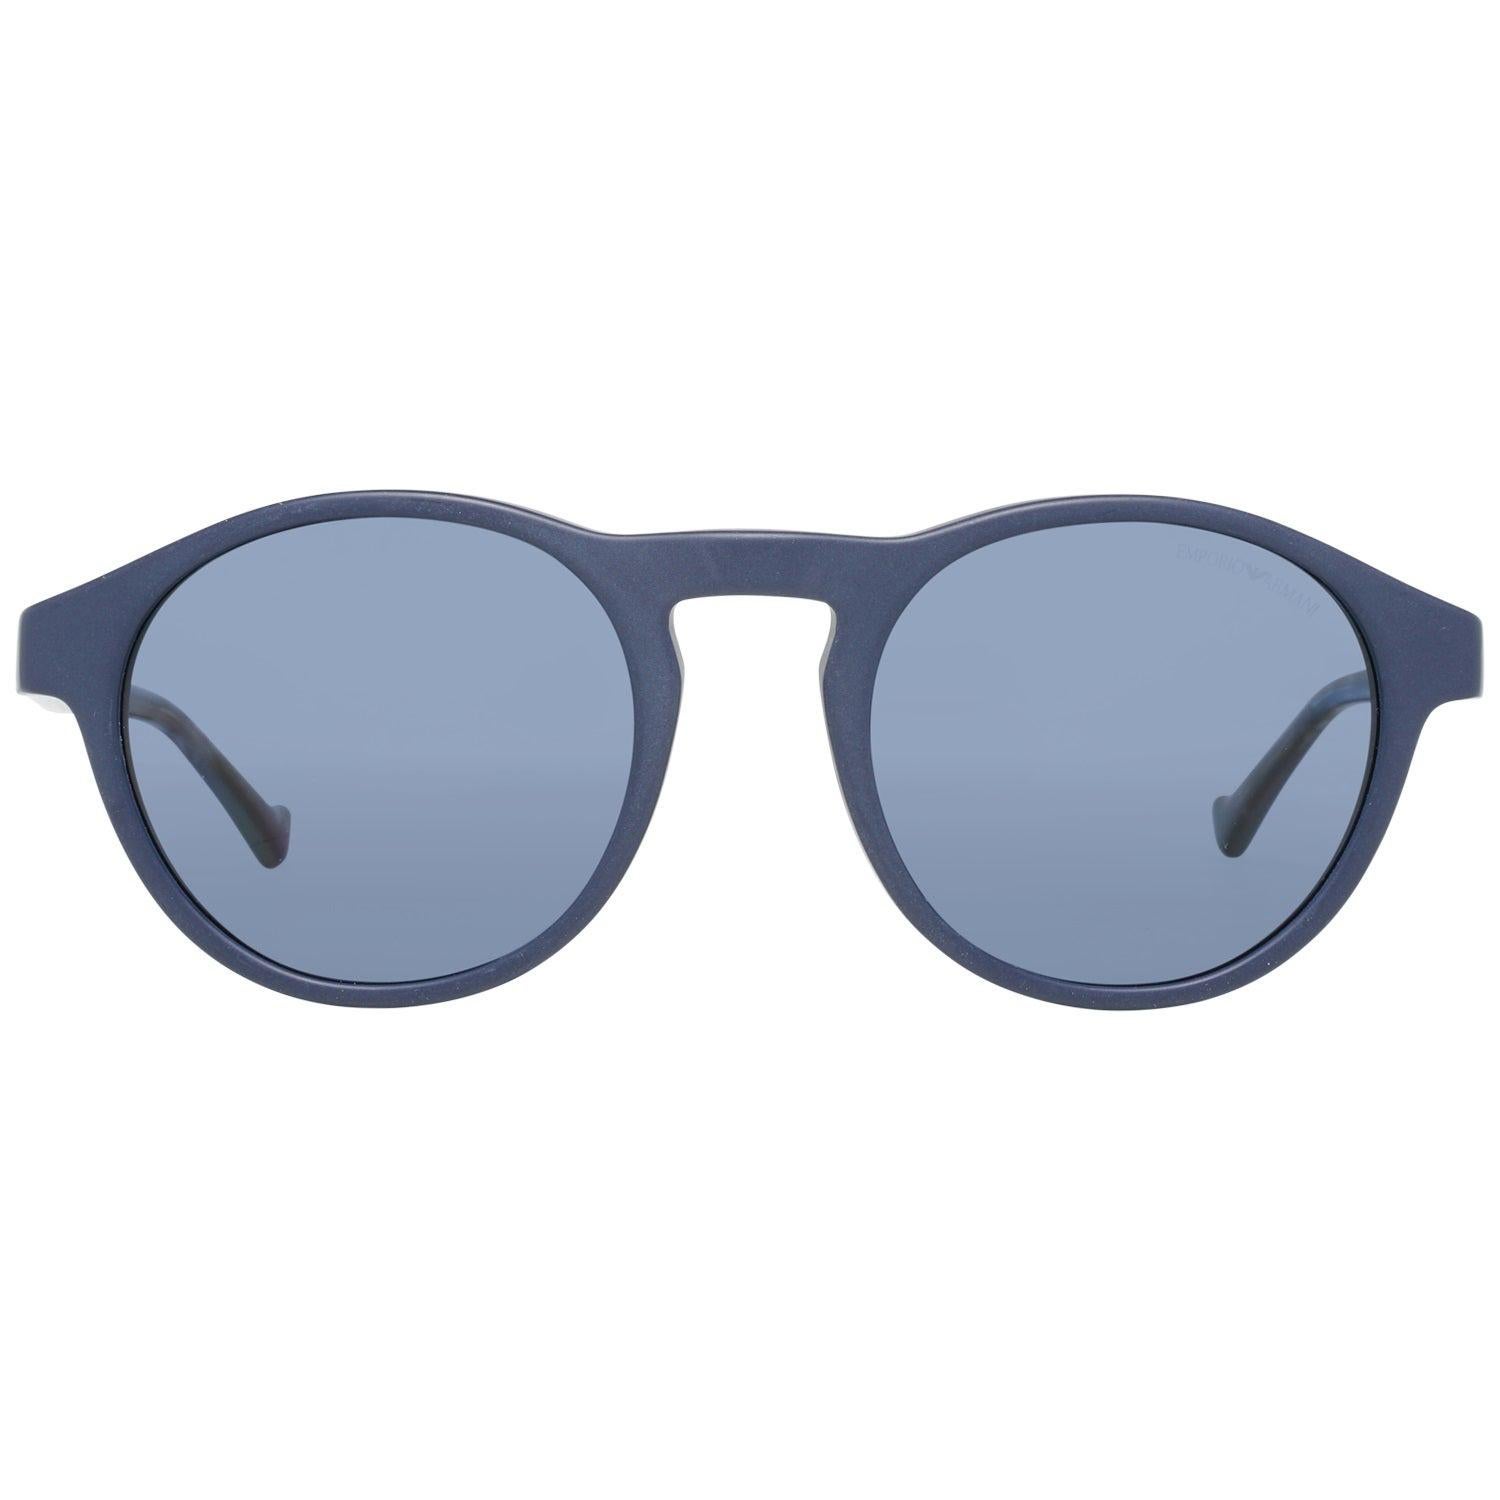 Emporio Armani Mint Unisex Blue Sunglasses EA4138F 5257542V 52-17-145 mm